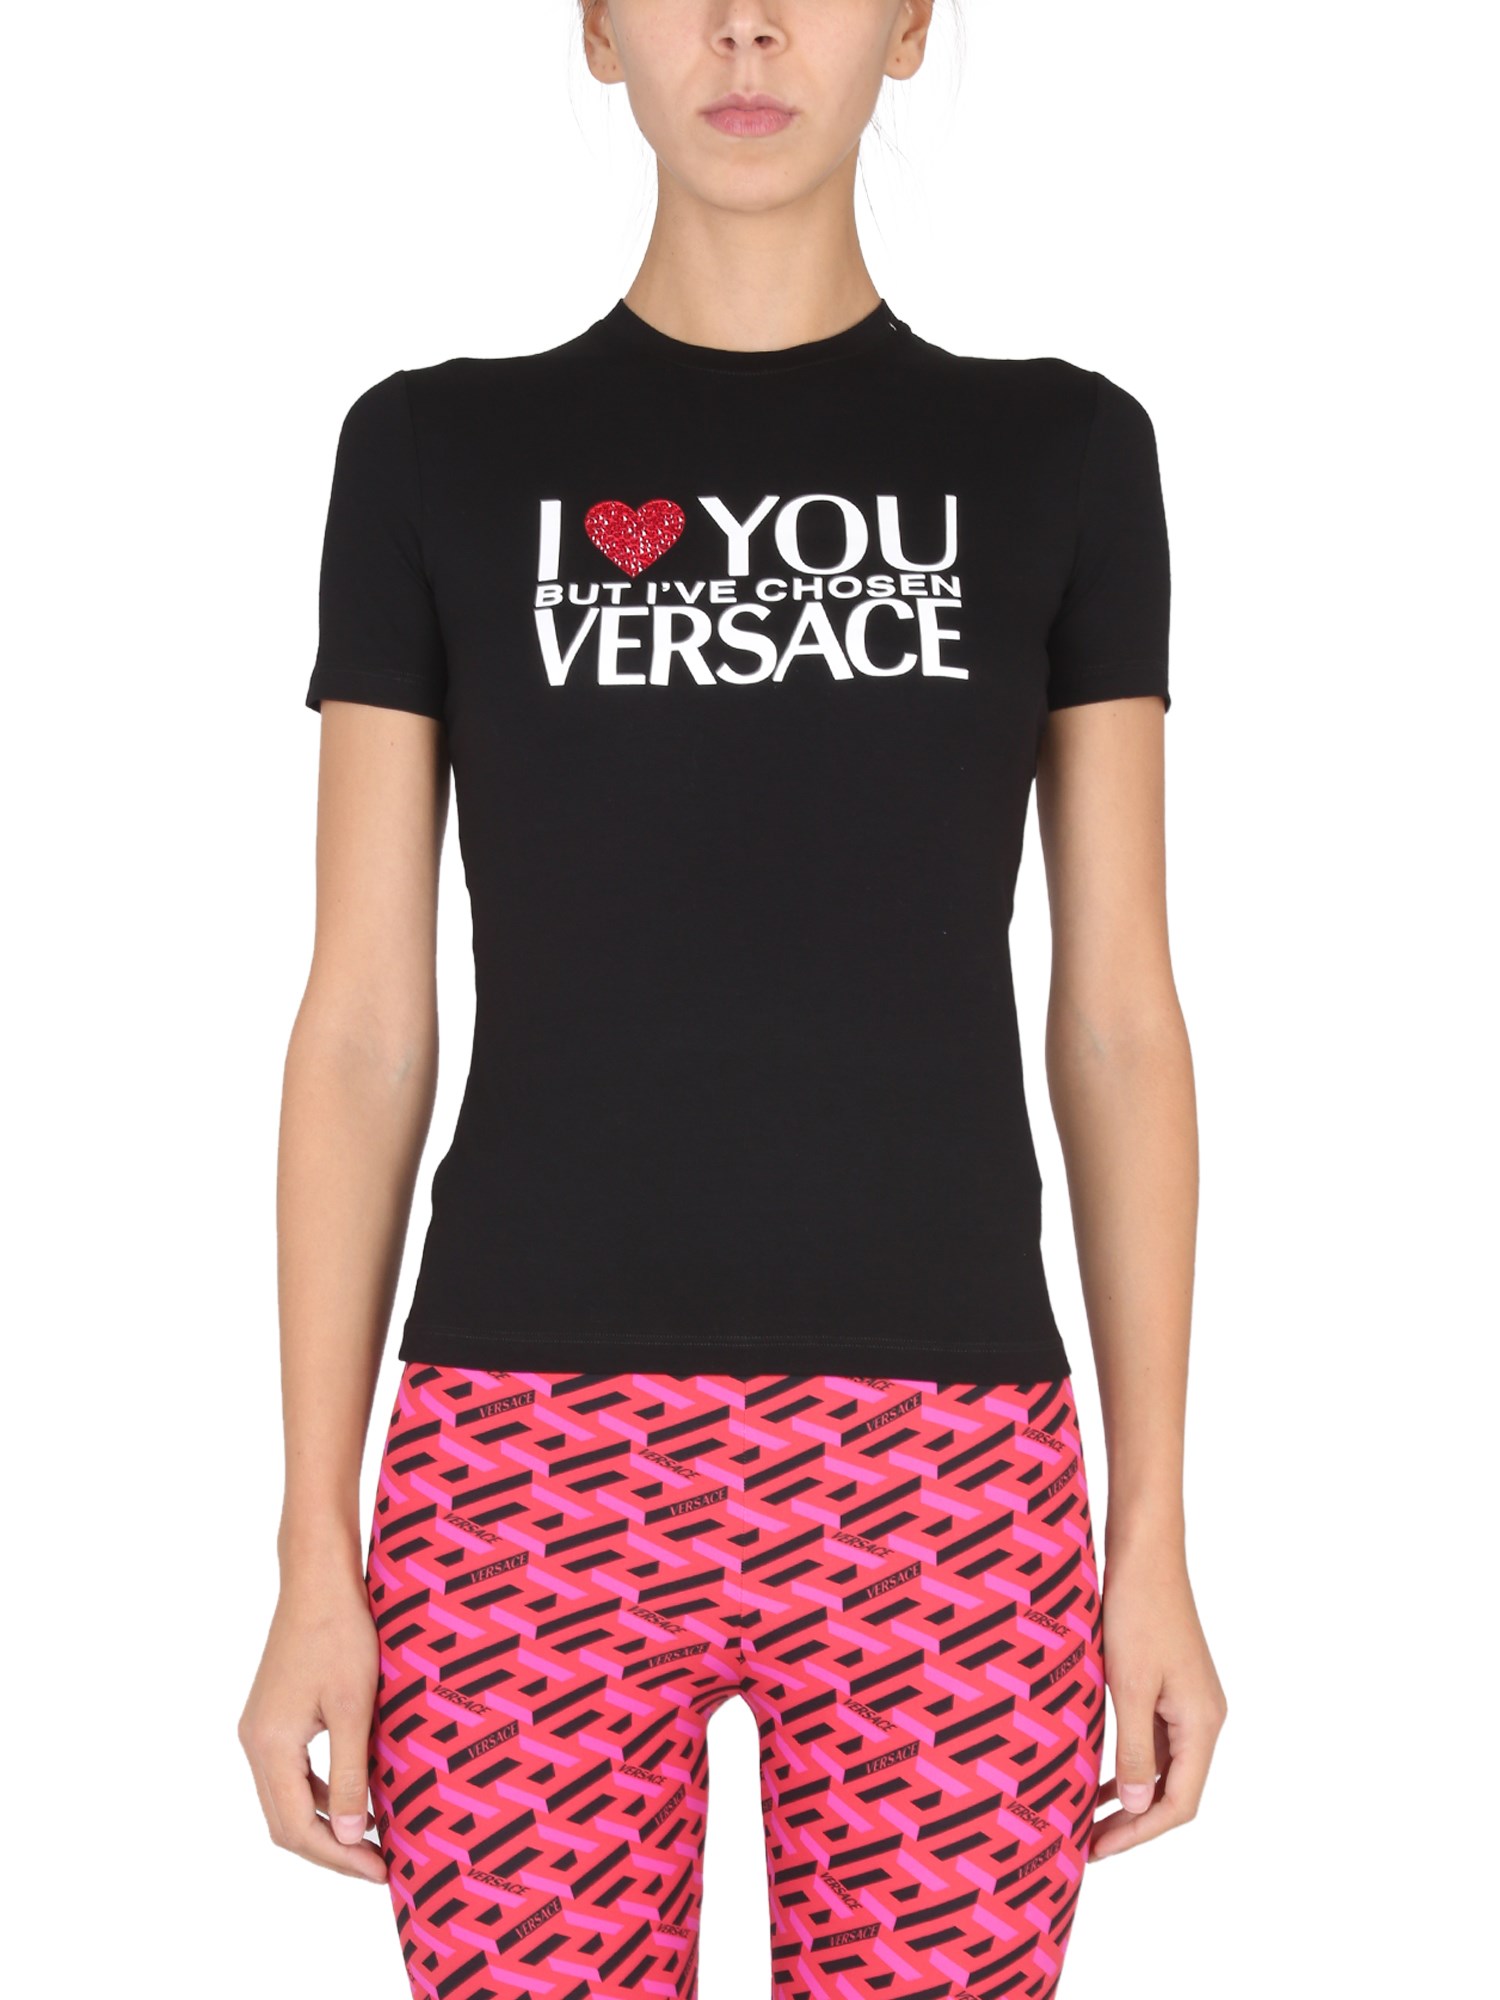 Versace versace t-shirt "i ♡ you but..."